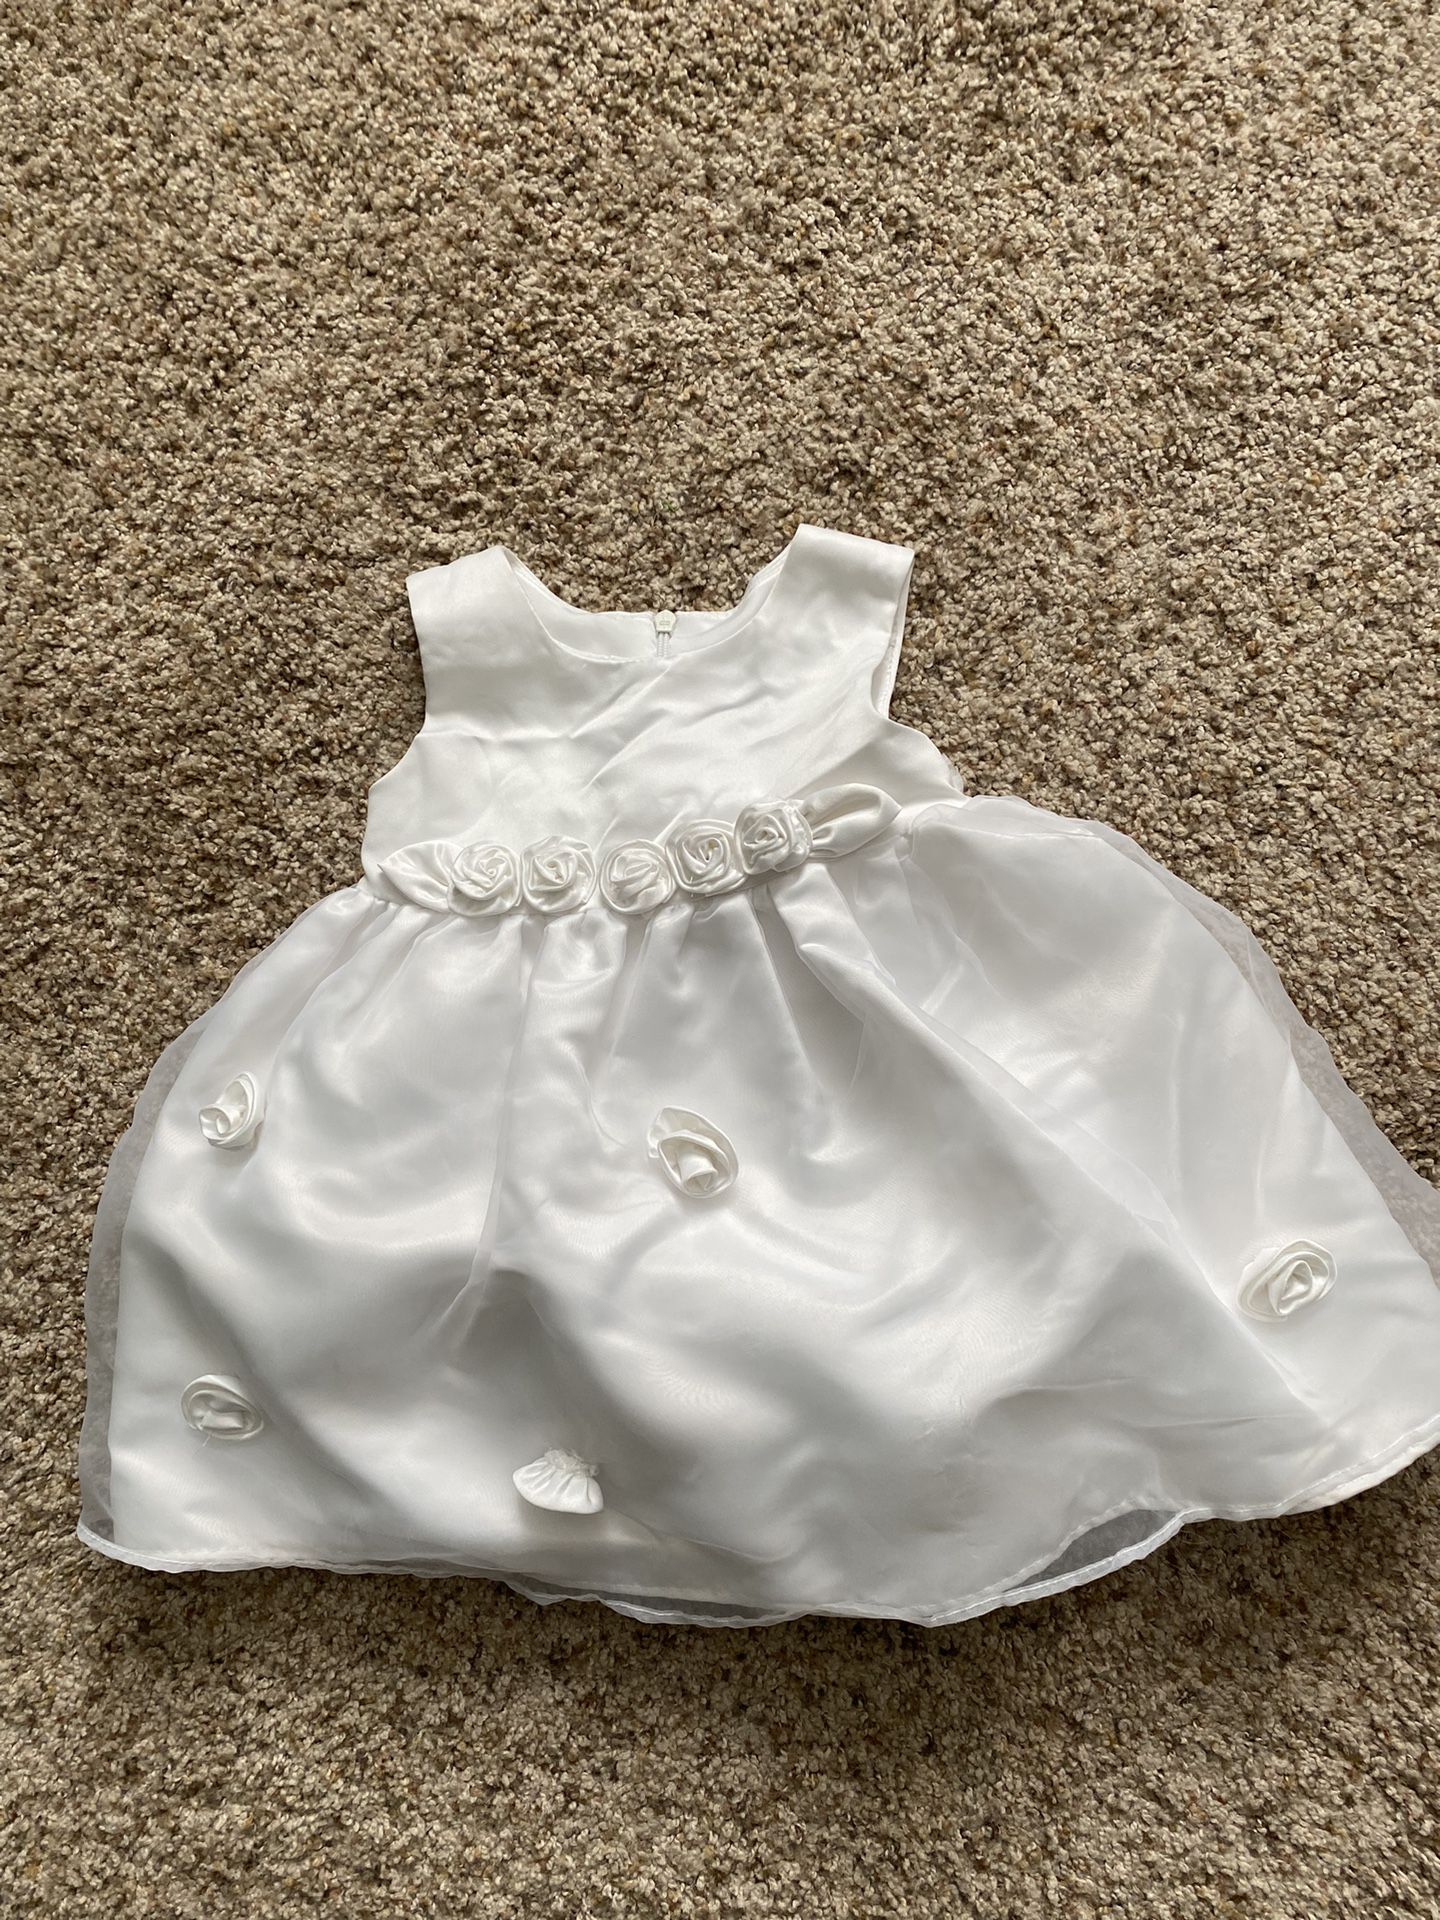 Baptism/ Flower Girl/ Party Dress